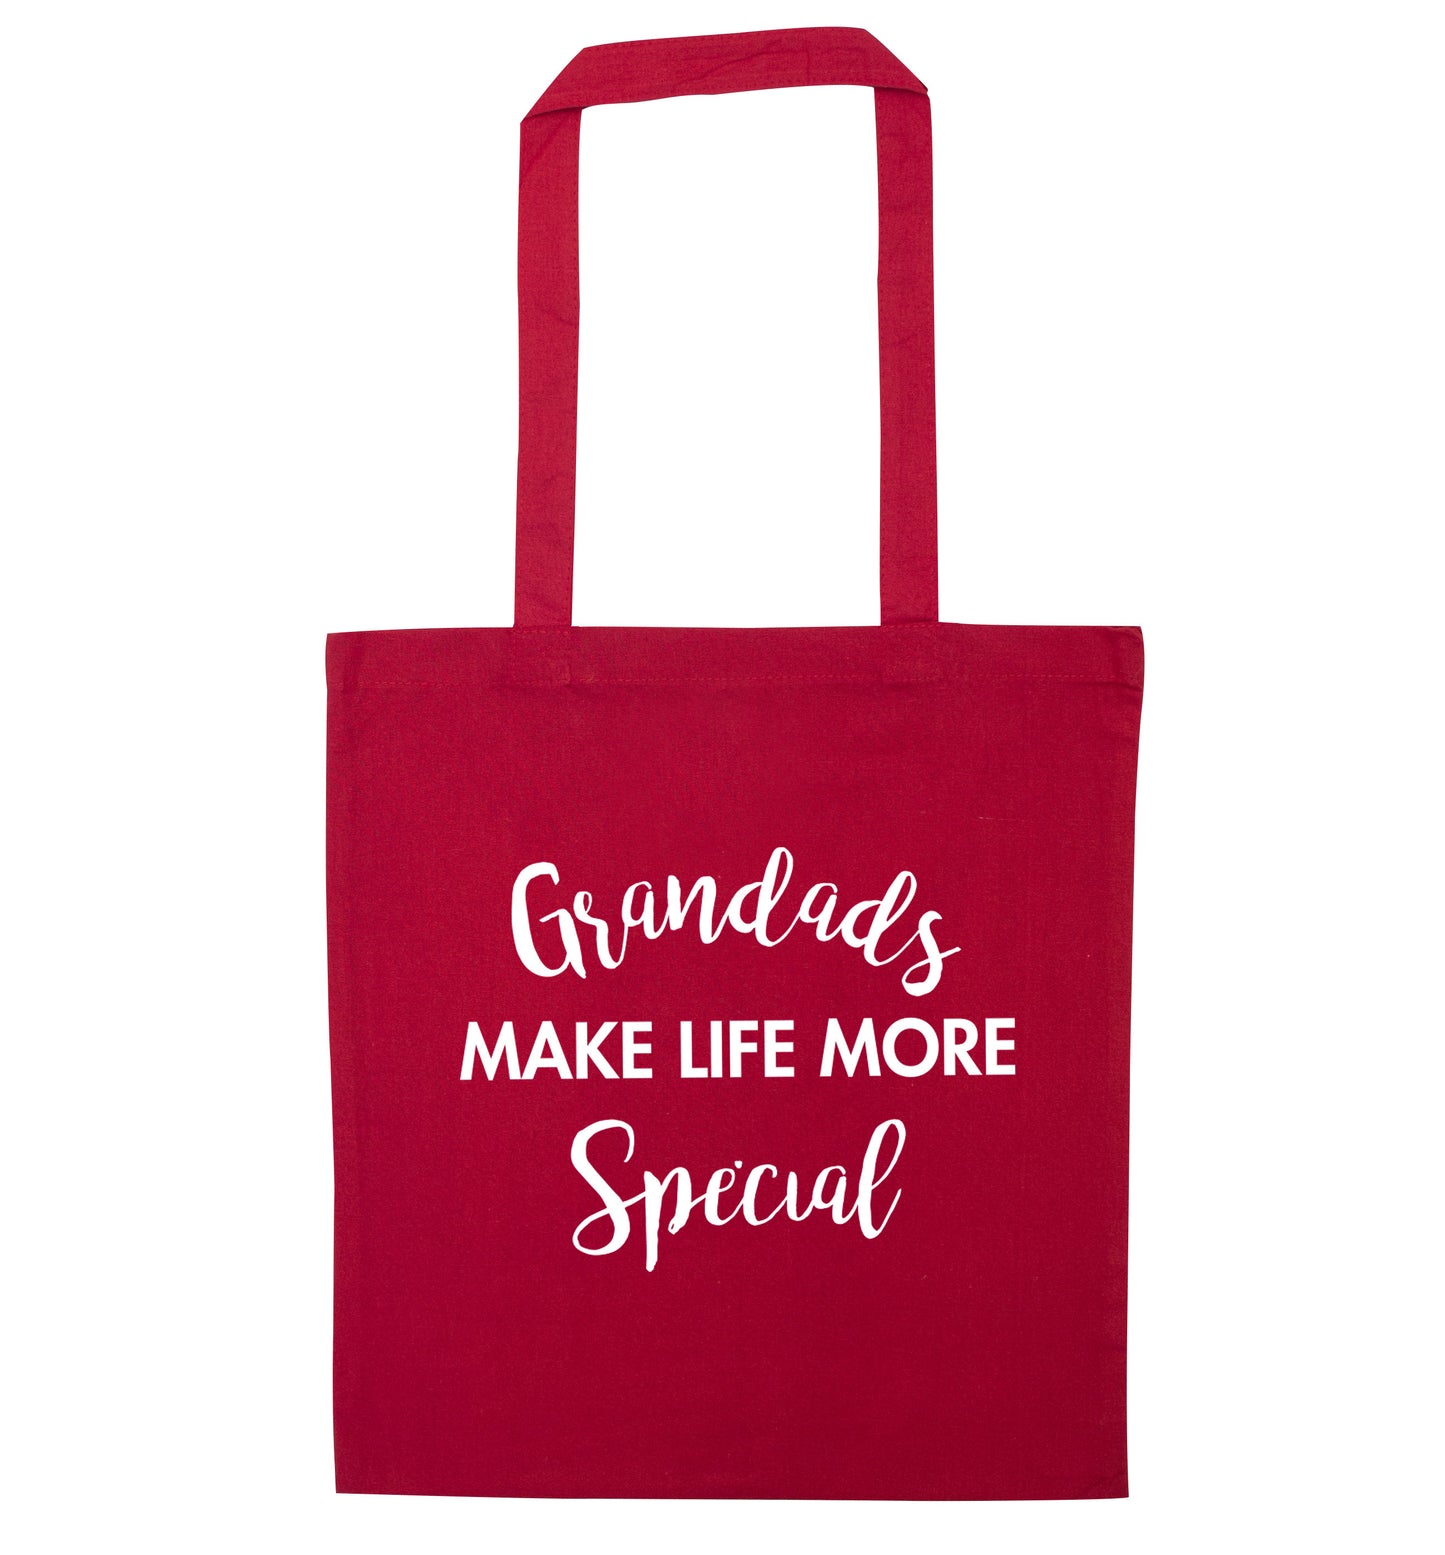 Grandads make life more special red tote bag